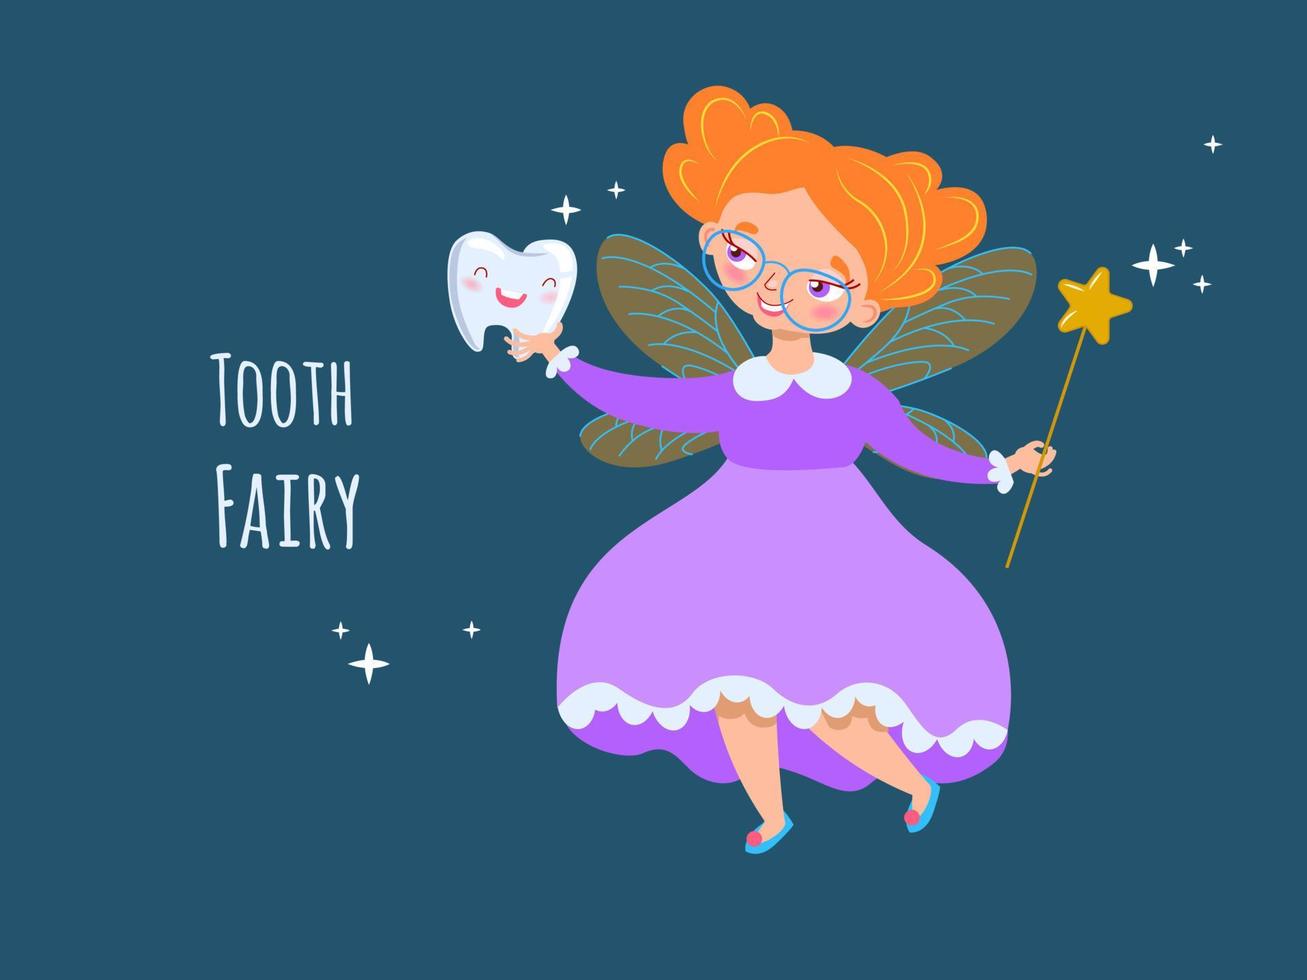 schattig tand fee met baby tand en magie toverstok, fee in bril met oranje haar, Purper jurk tekenfilm karakter met Vleugels vector illustratie